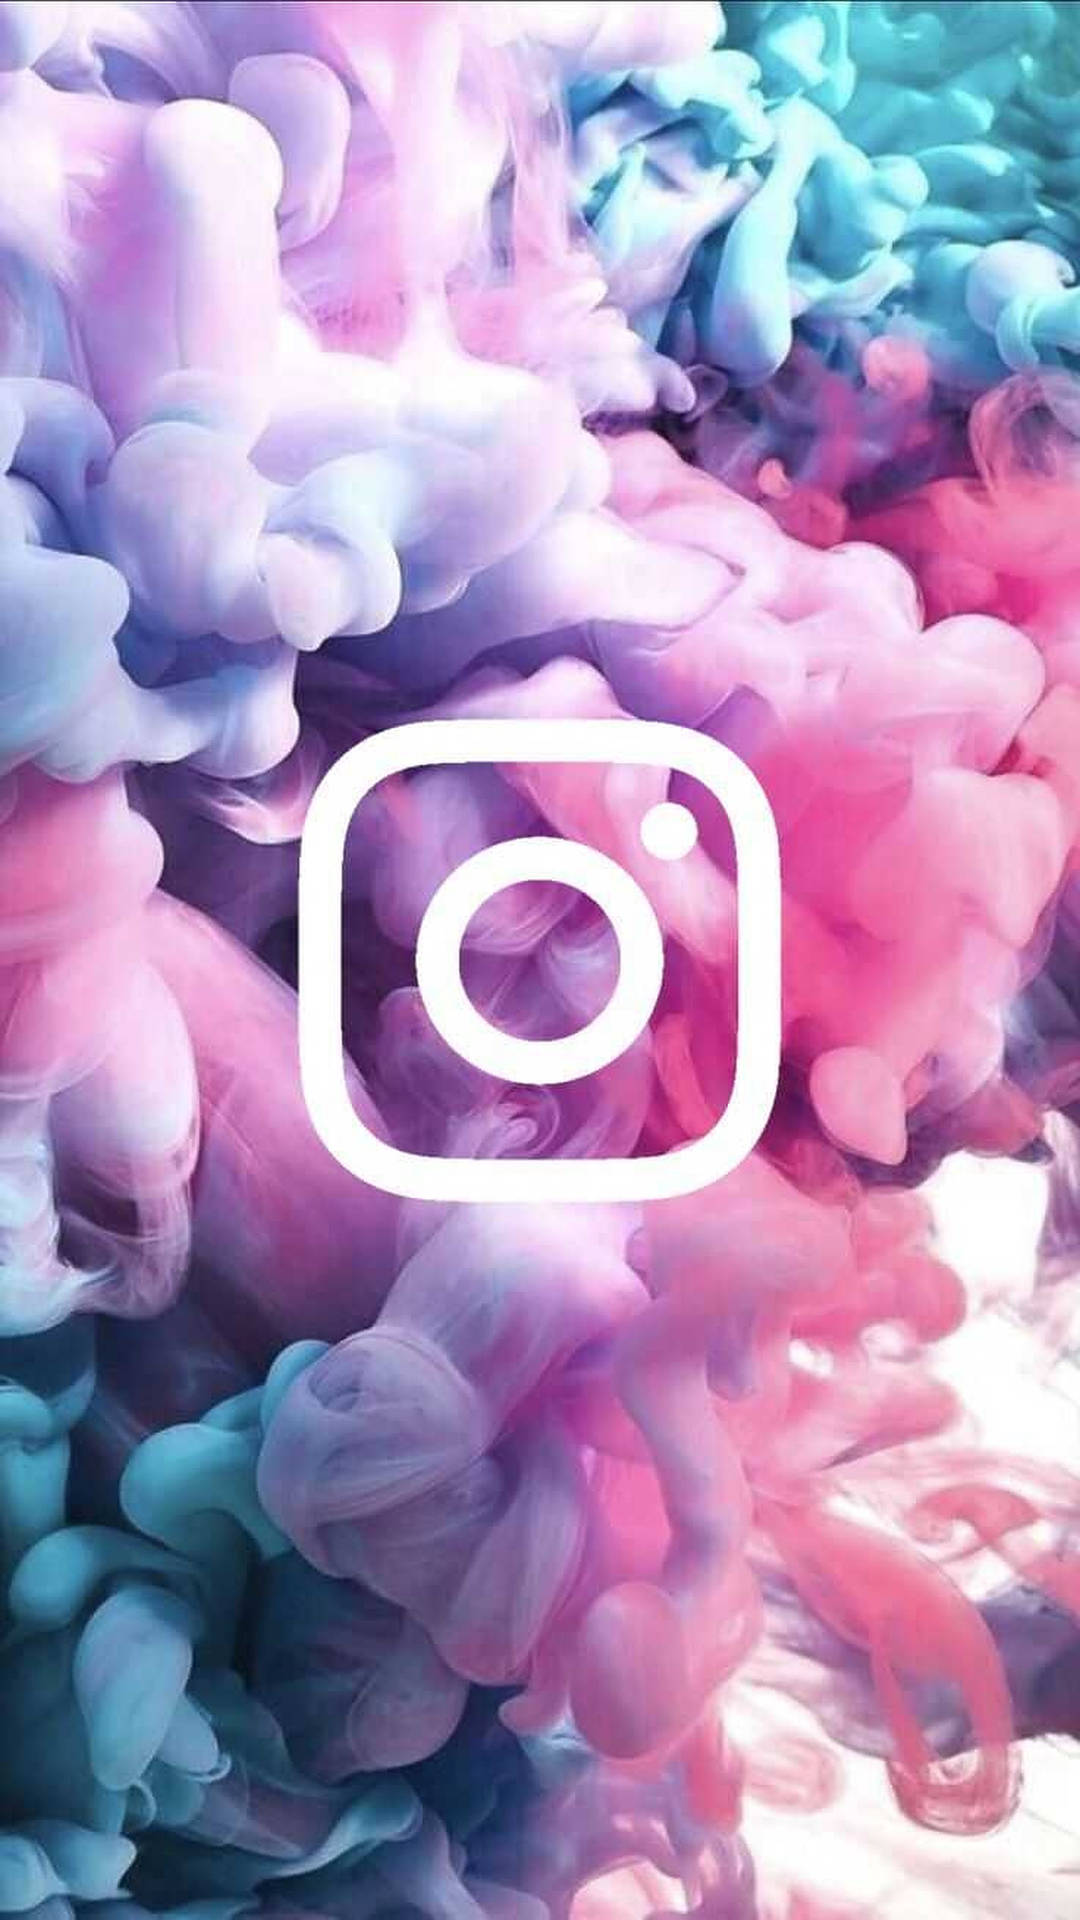 Free Instagram Wallpaper Downloads, [200+] Instagram Wallpapers for FREE |  